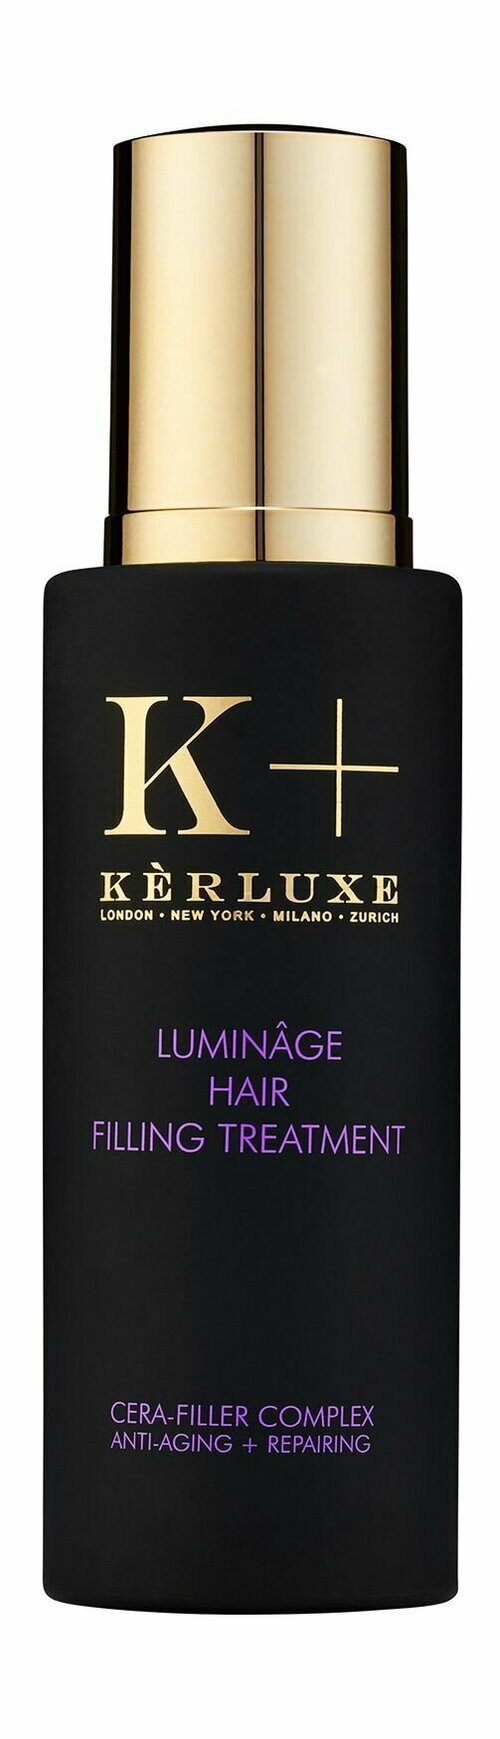 Антивозрастной филлер для укрепления и объема волос Kerluxe Luminage Hair Filling Treatment